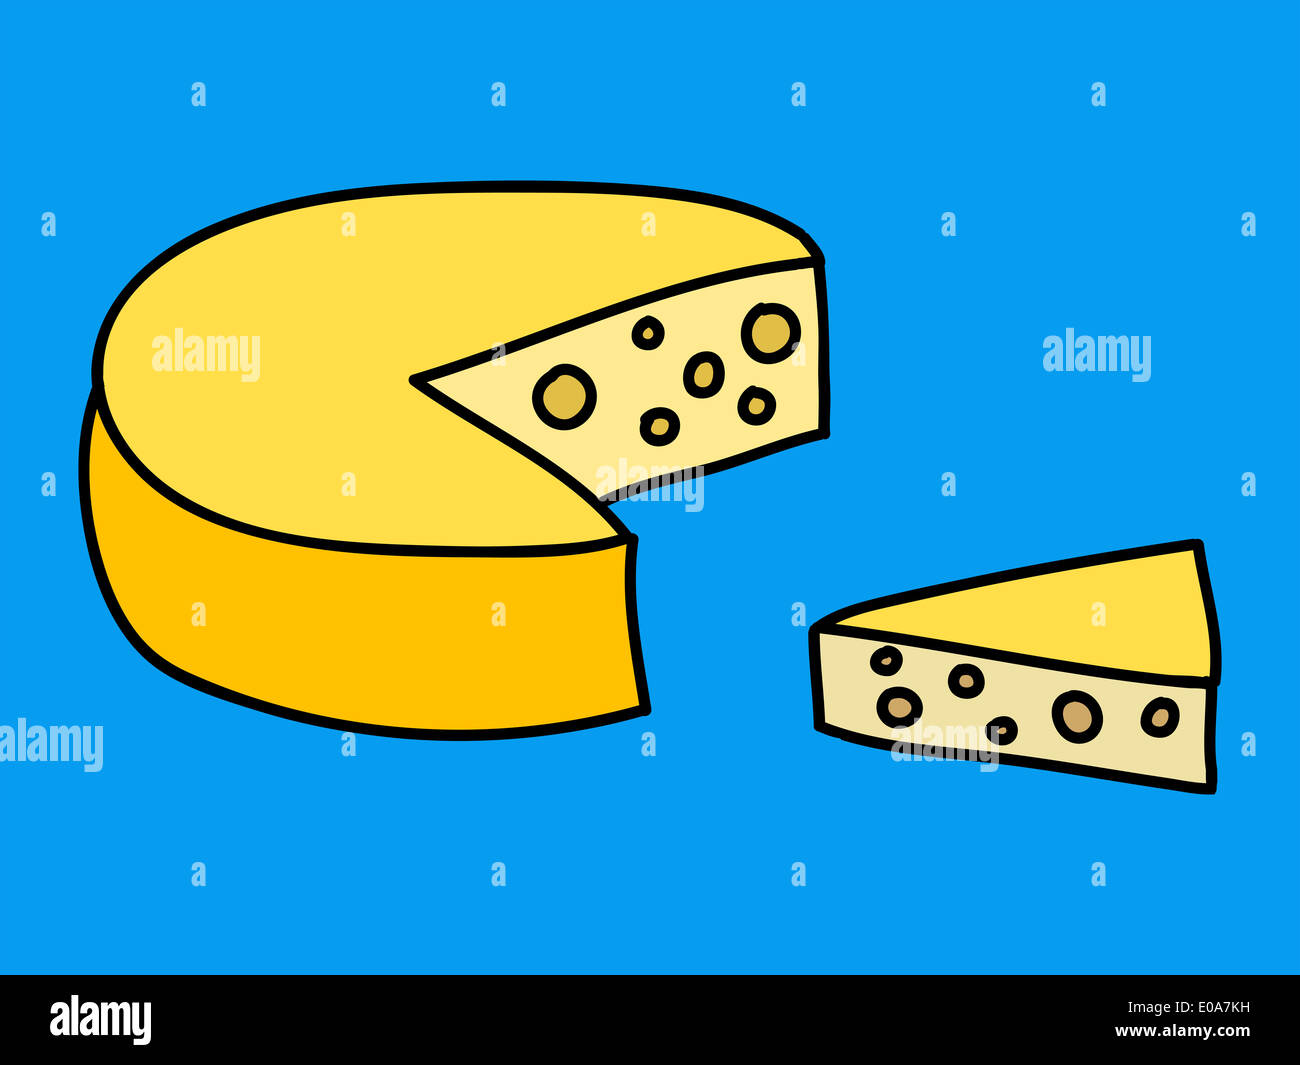 Cheese illustration Stock Photo